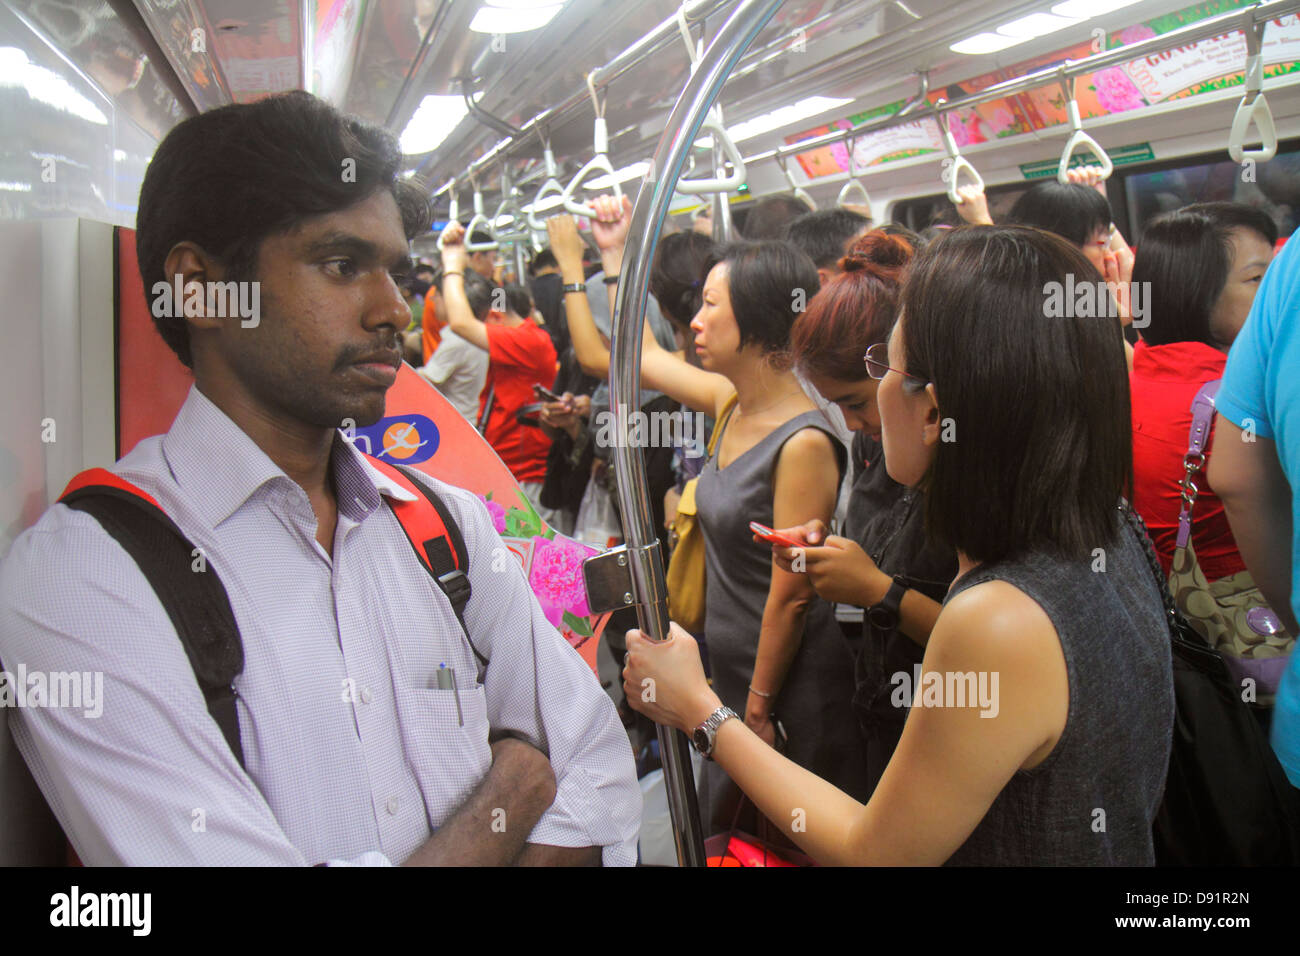 Singapore Orchard MRT Station,North South Line,subway train,riders,commuters,Asian man men male,woman female women,standing,passenger cabin,Sing130205 Stock Photo